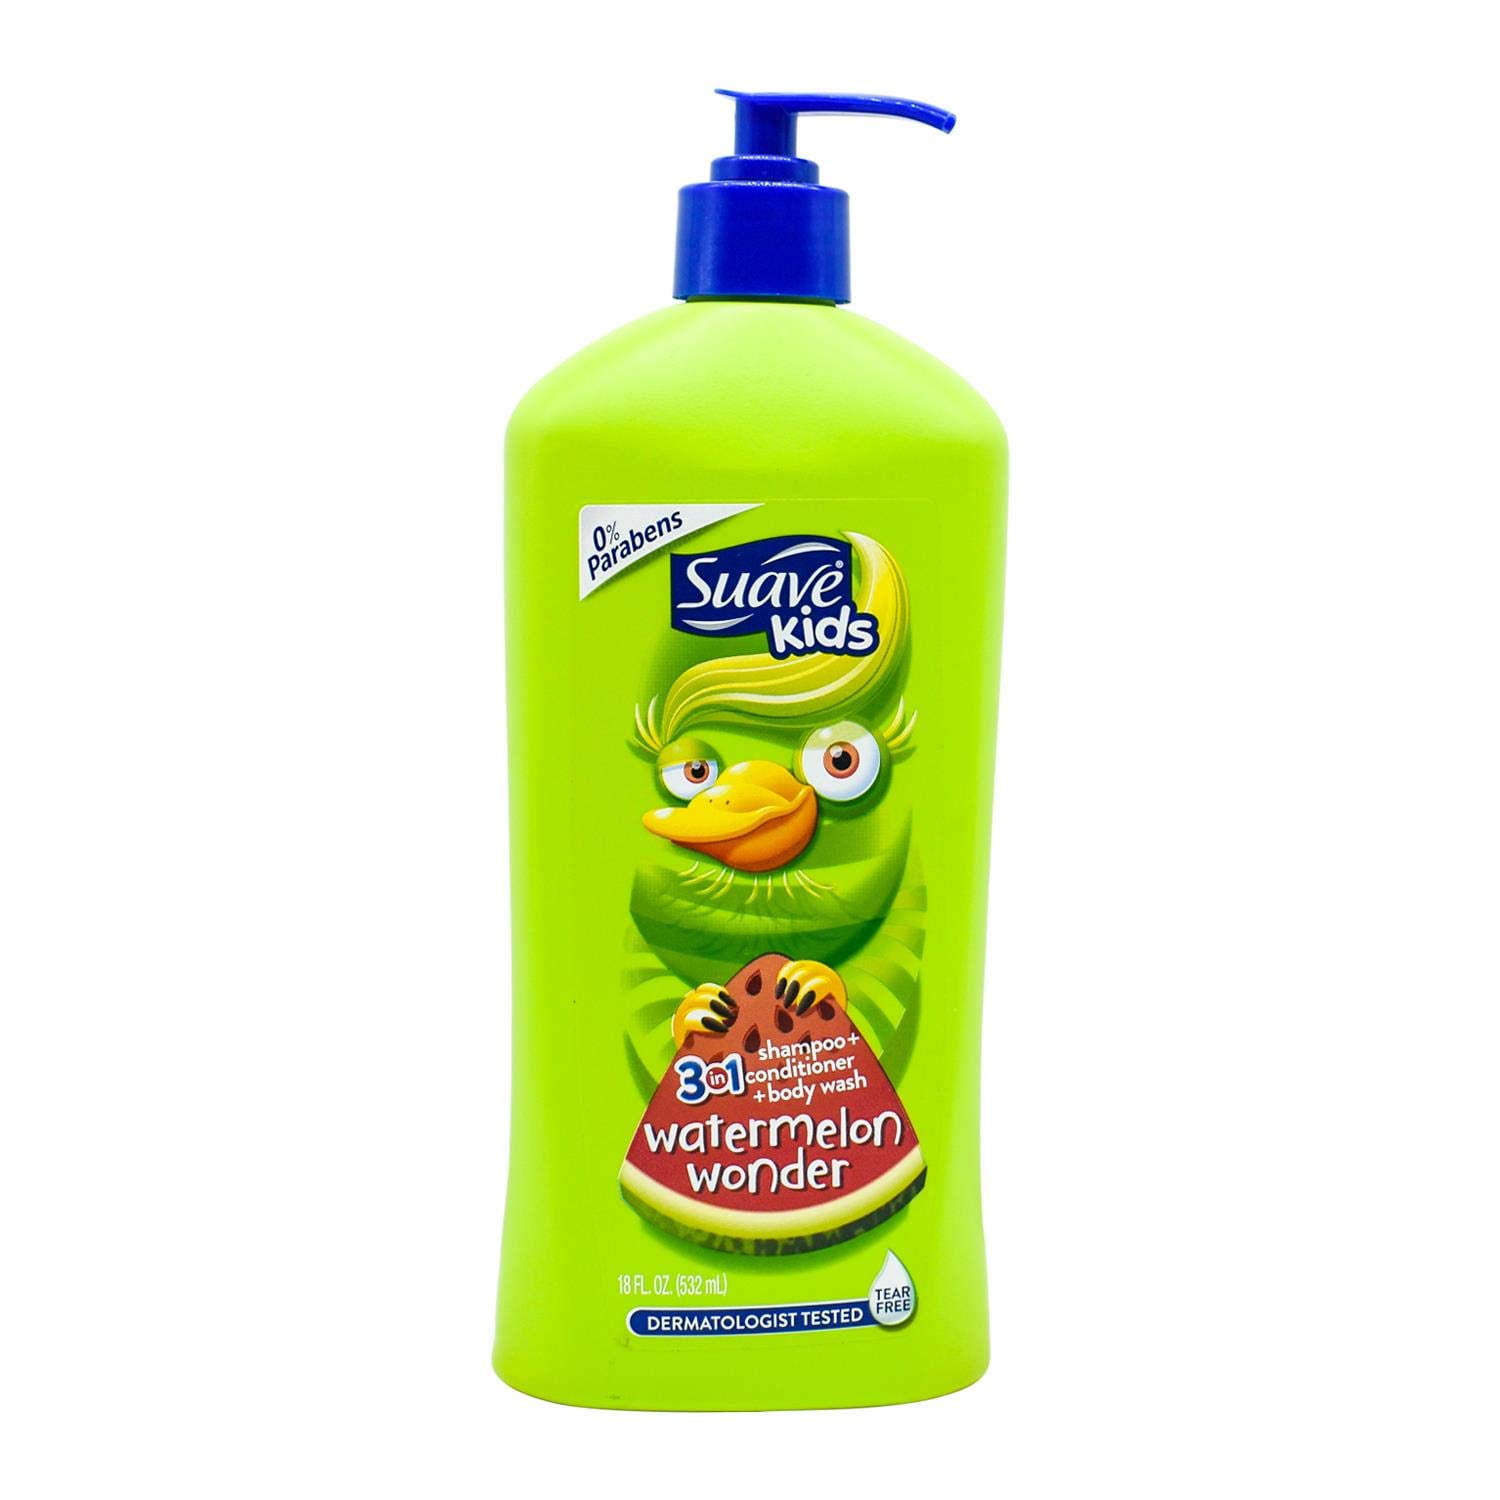 Suave Kids Watermelon Wonder 3-in-1 Shampoo, Conditioner, Body Wash, 18 oz, 3 Pack